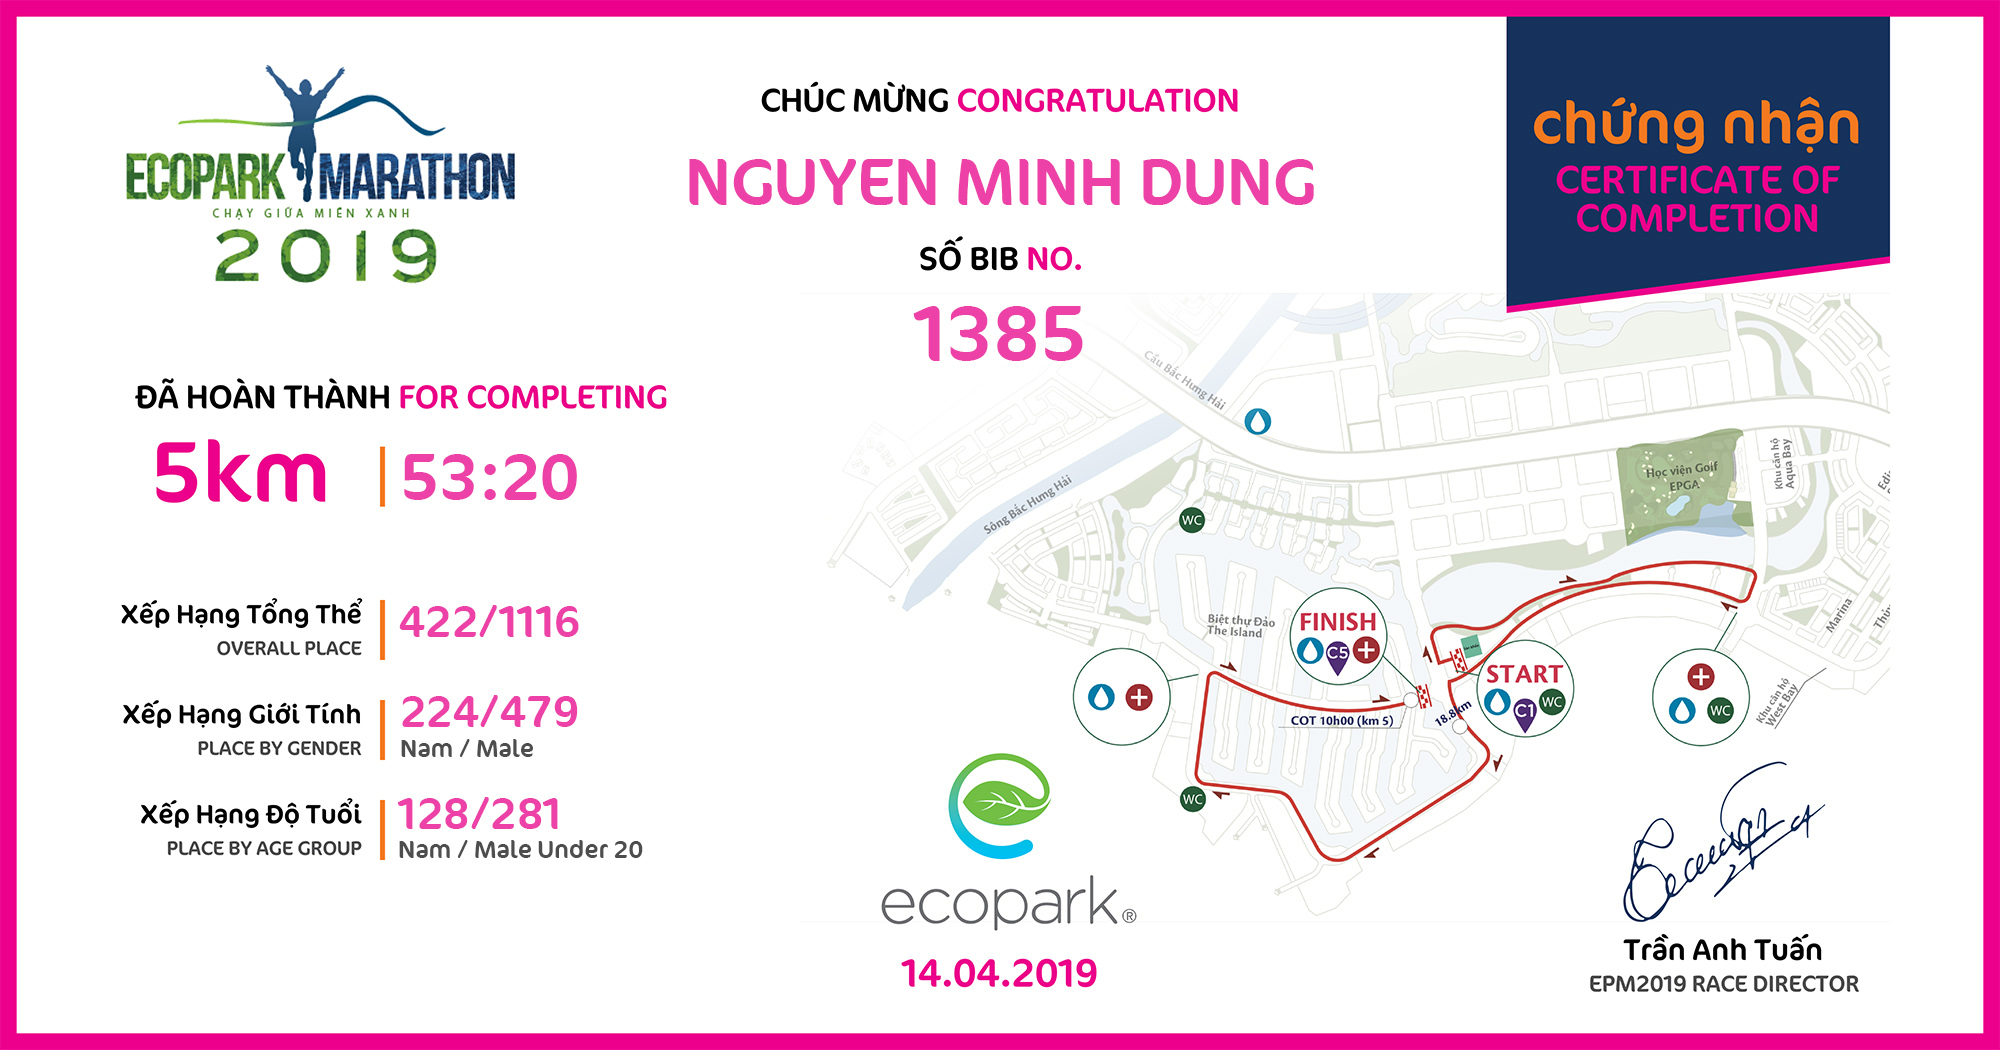 1385 - Nguyen Minh Dung